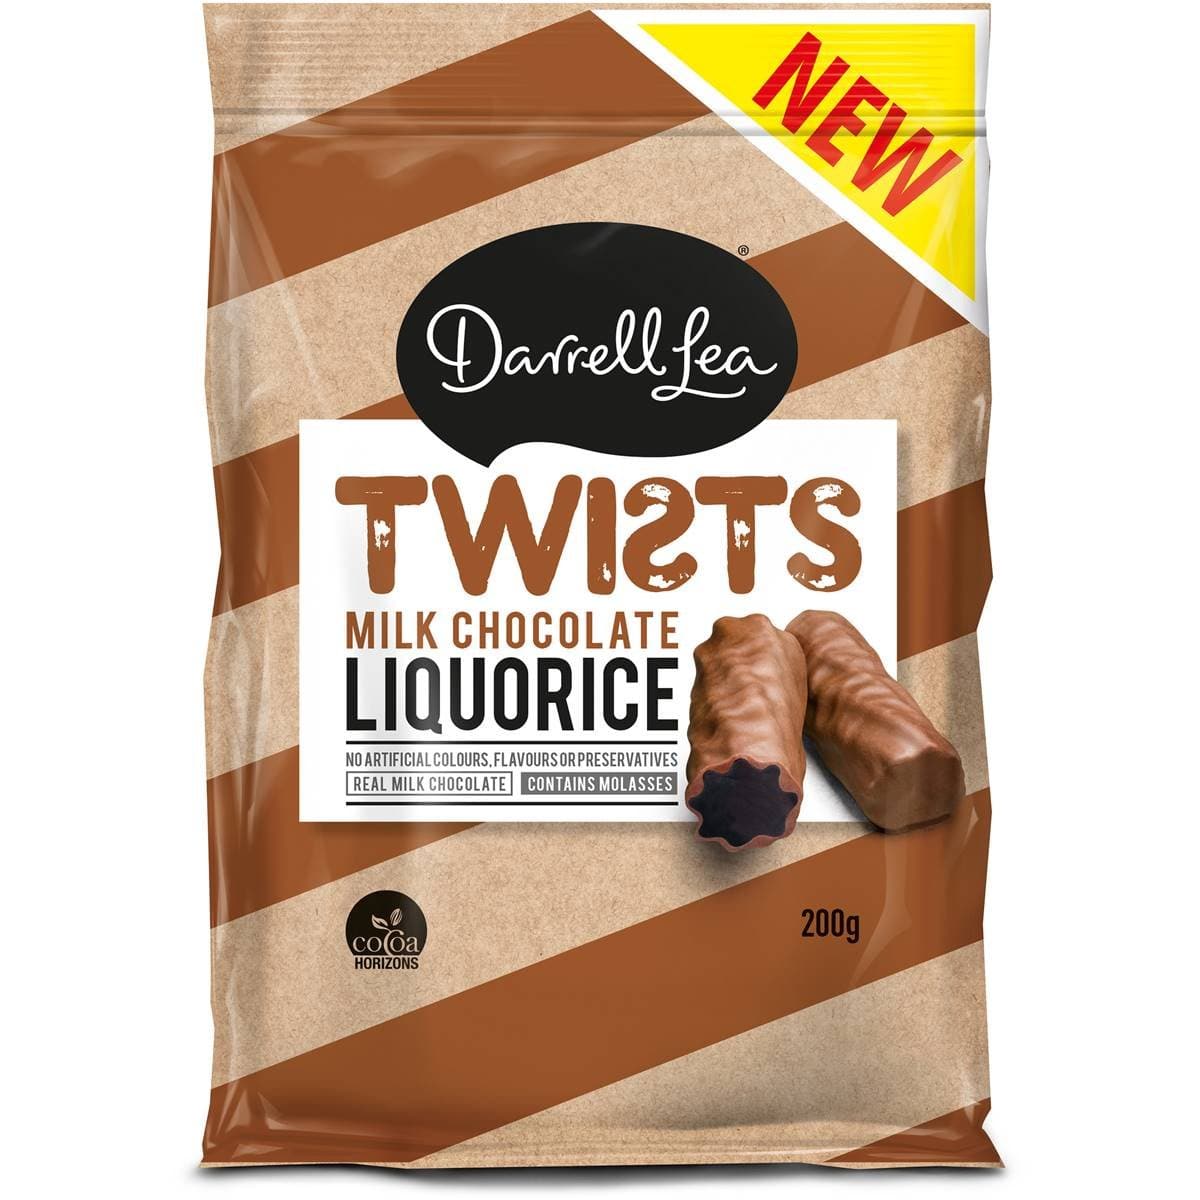 Darrell Lea Twists Milk Chocolate Liquorice 200g